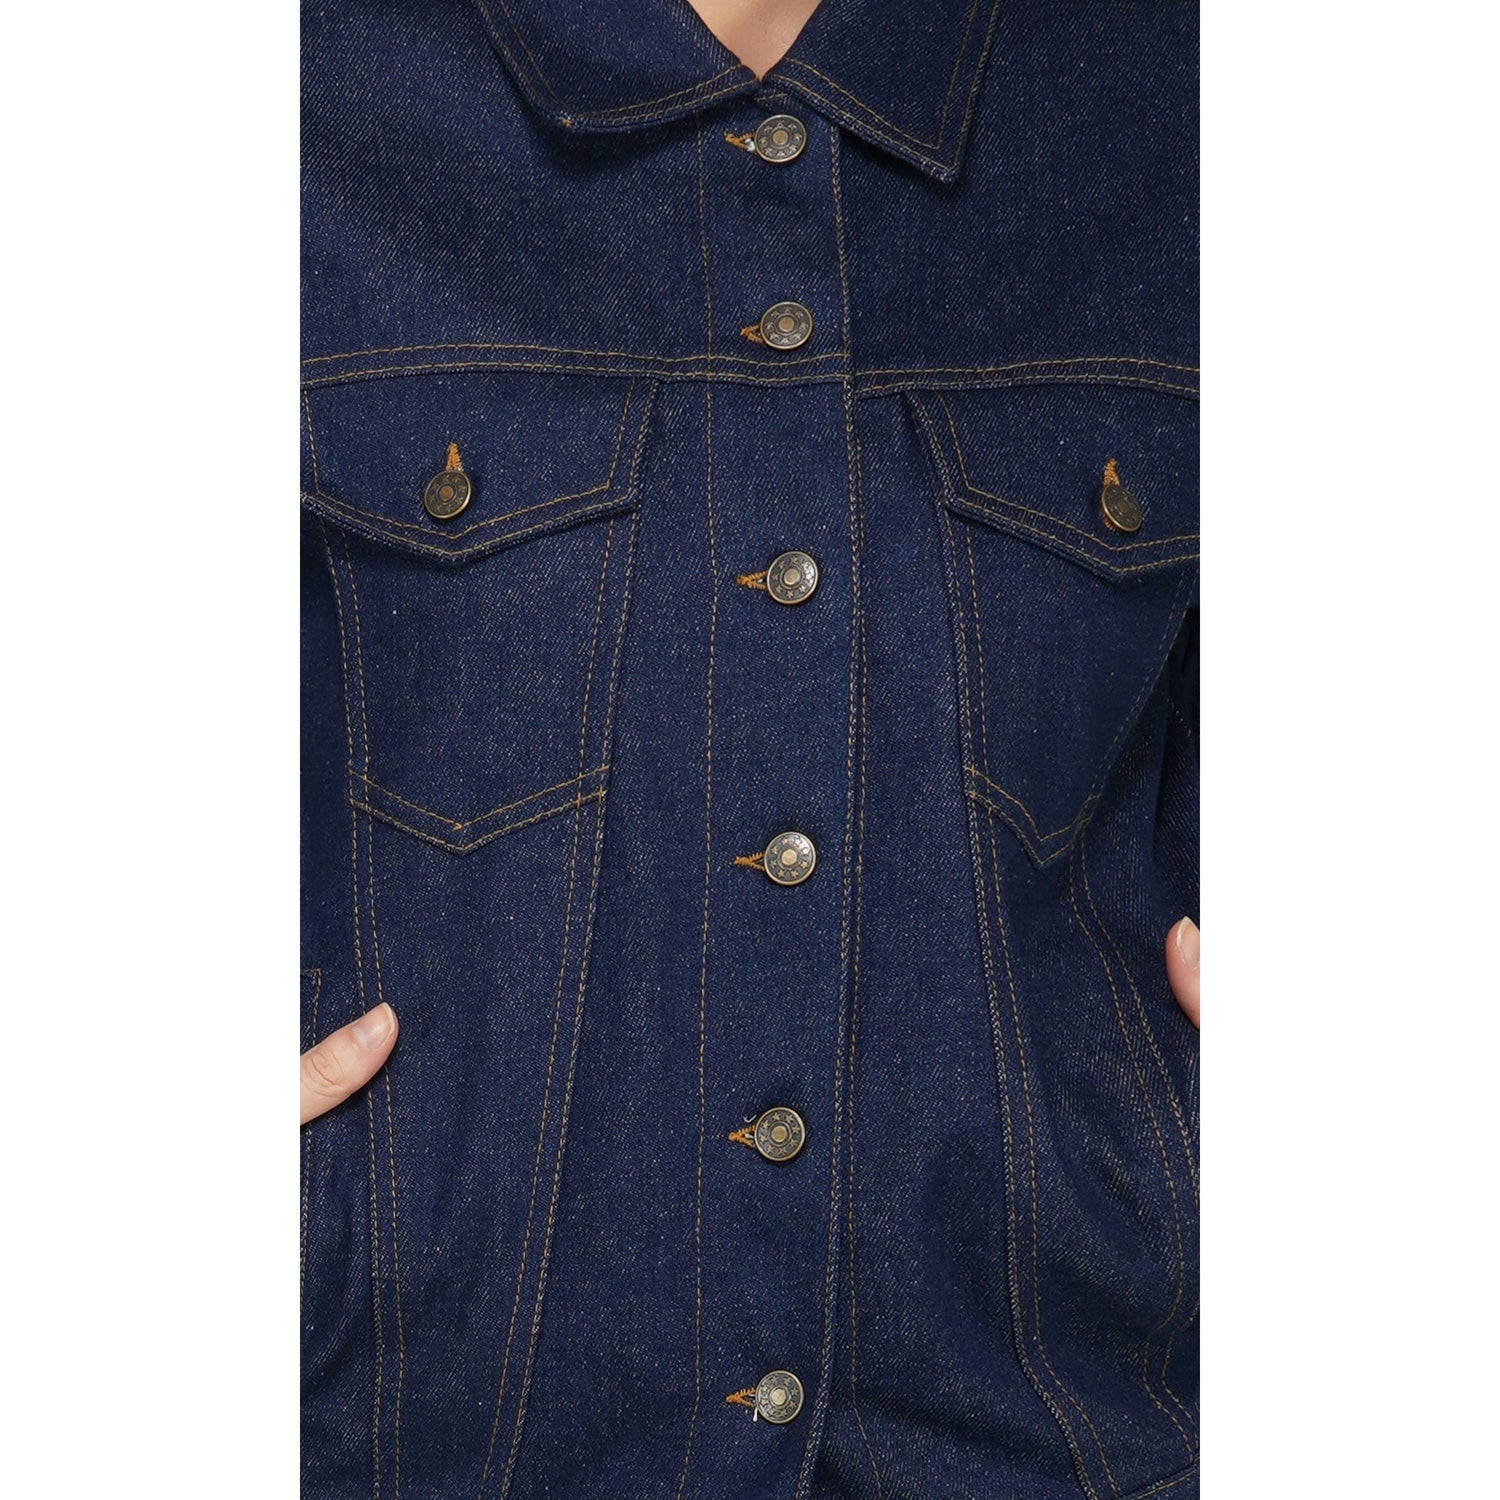 SLAY. Women's Embroidered Navy Blue Denim Jacket-clothing-to-slay.myshopify.com-Denim Jacket